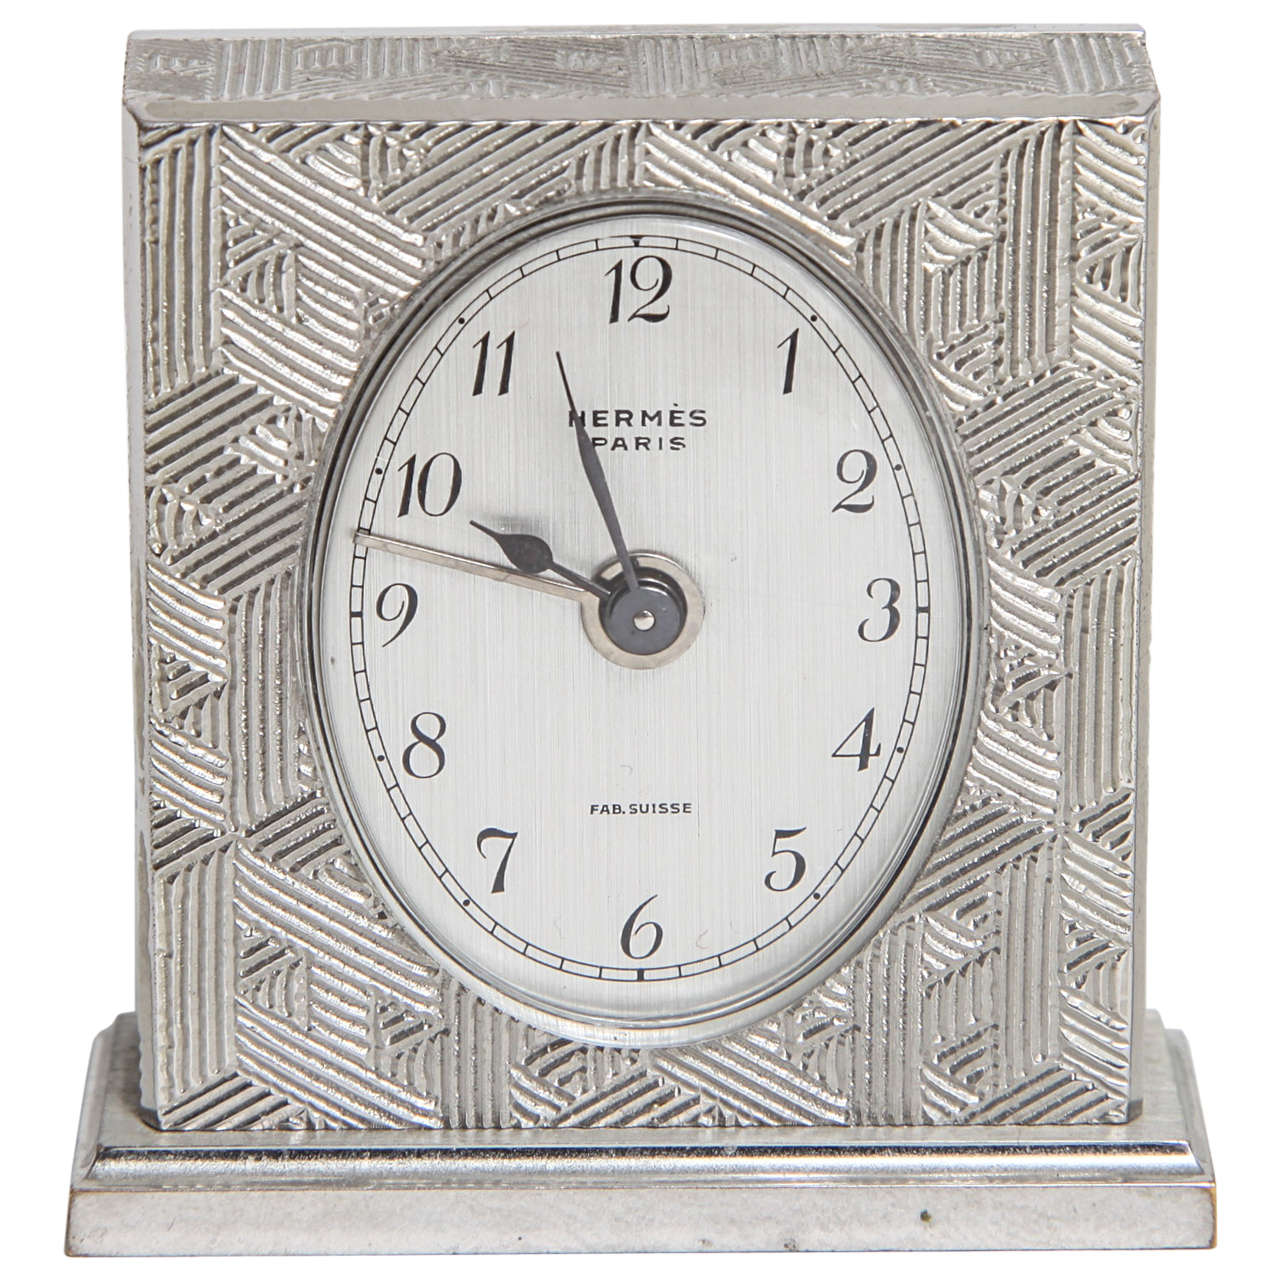 Hermes Art Deco Travel Clock in Box